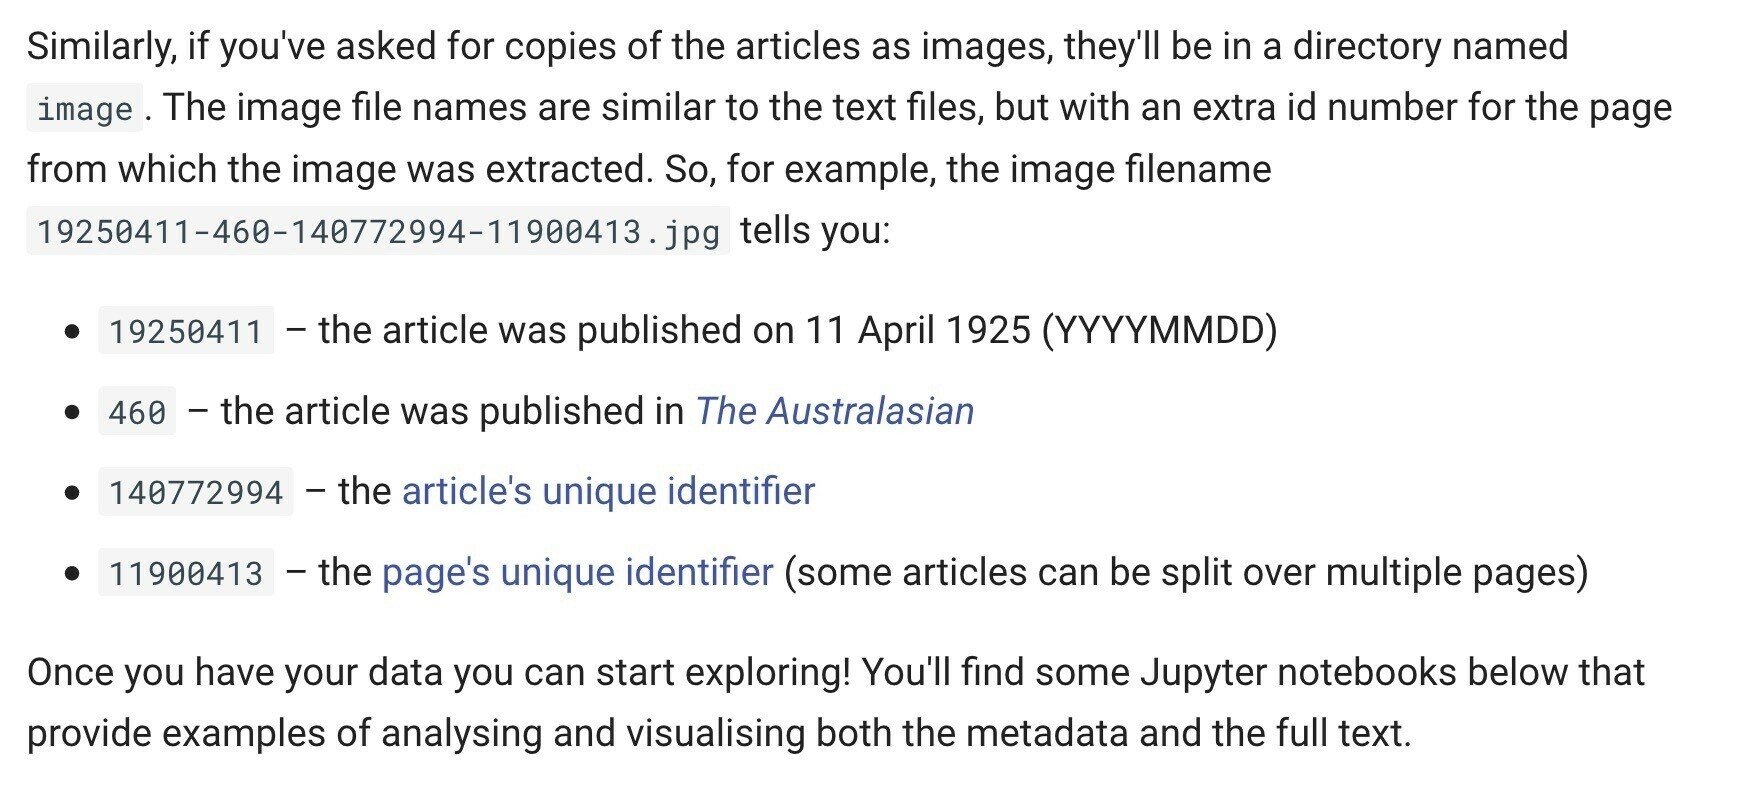 Details of image file naming scheme